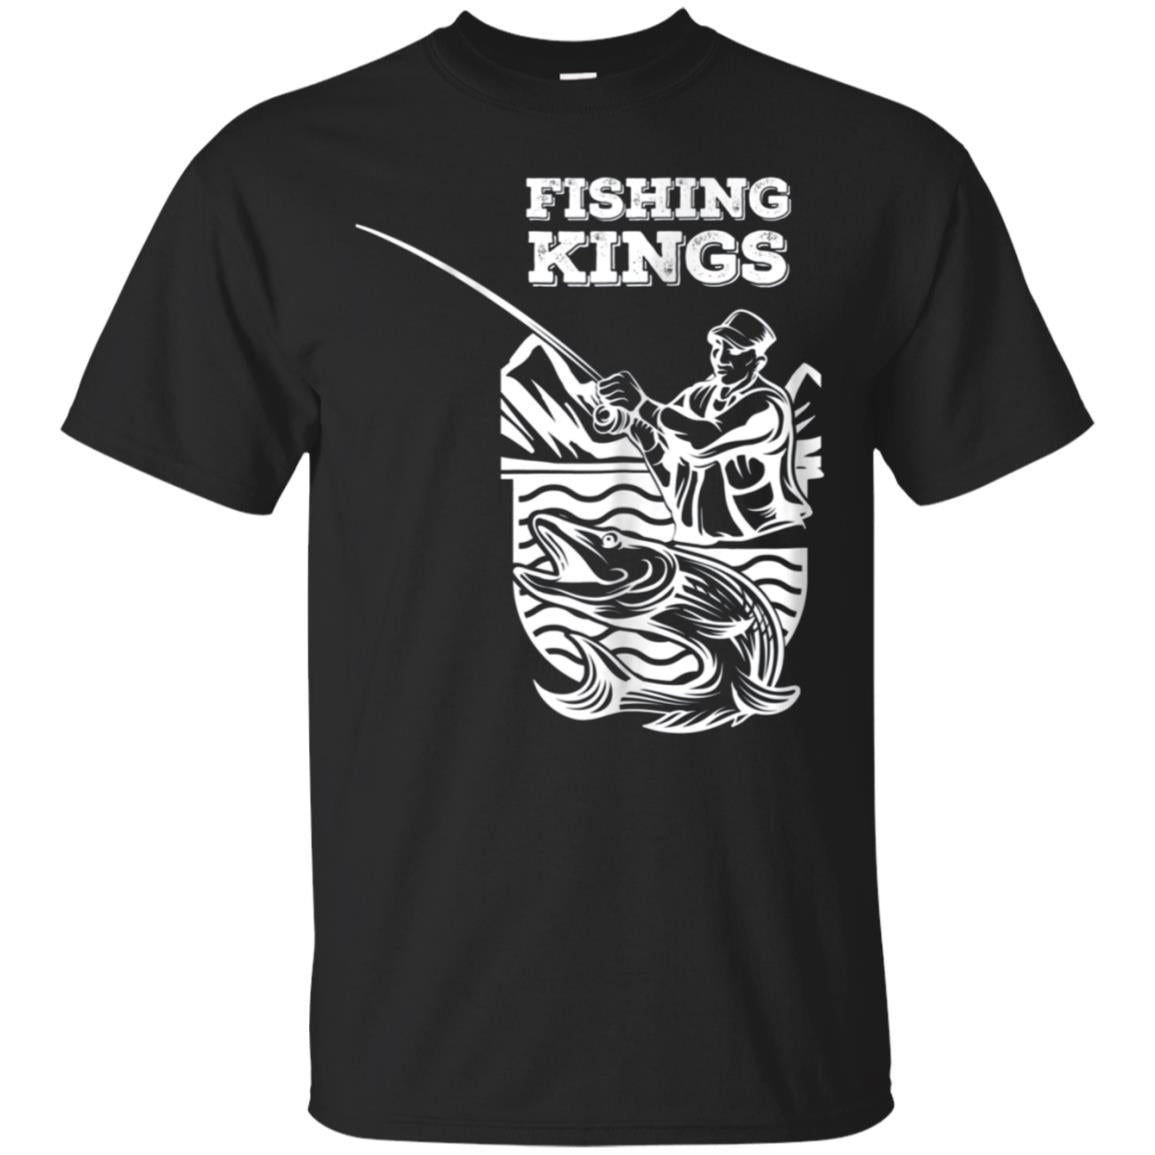 Fisherman T-shirt Fishing Kings Tee